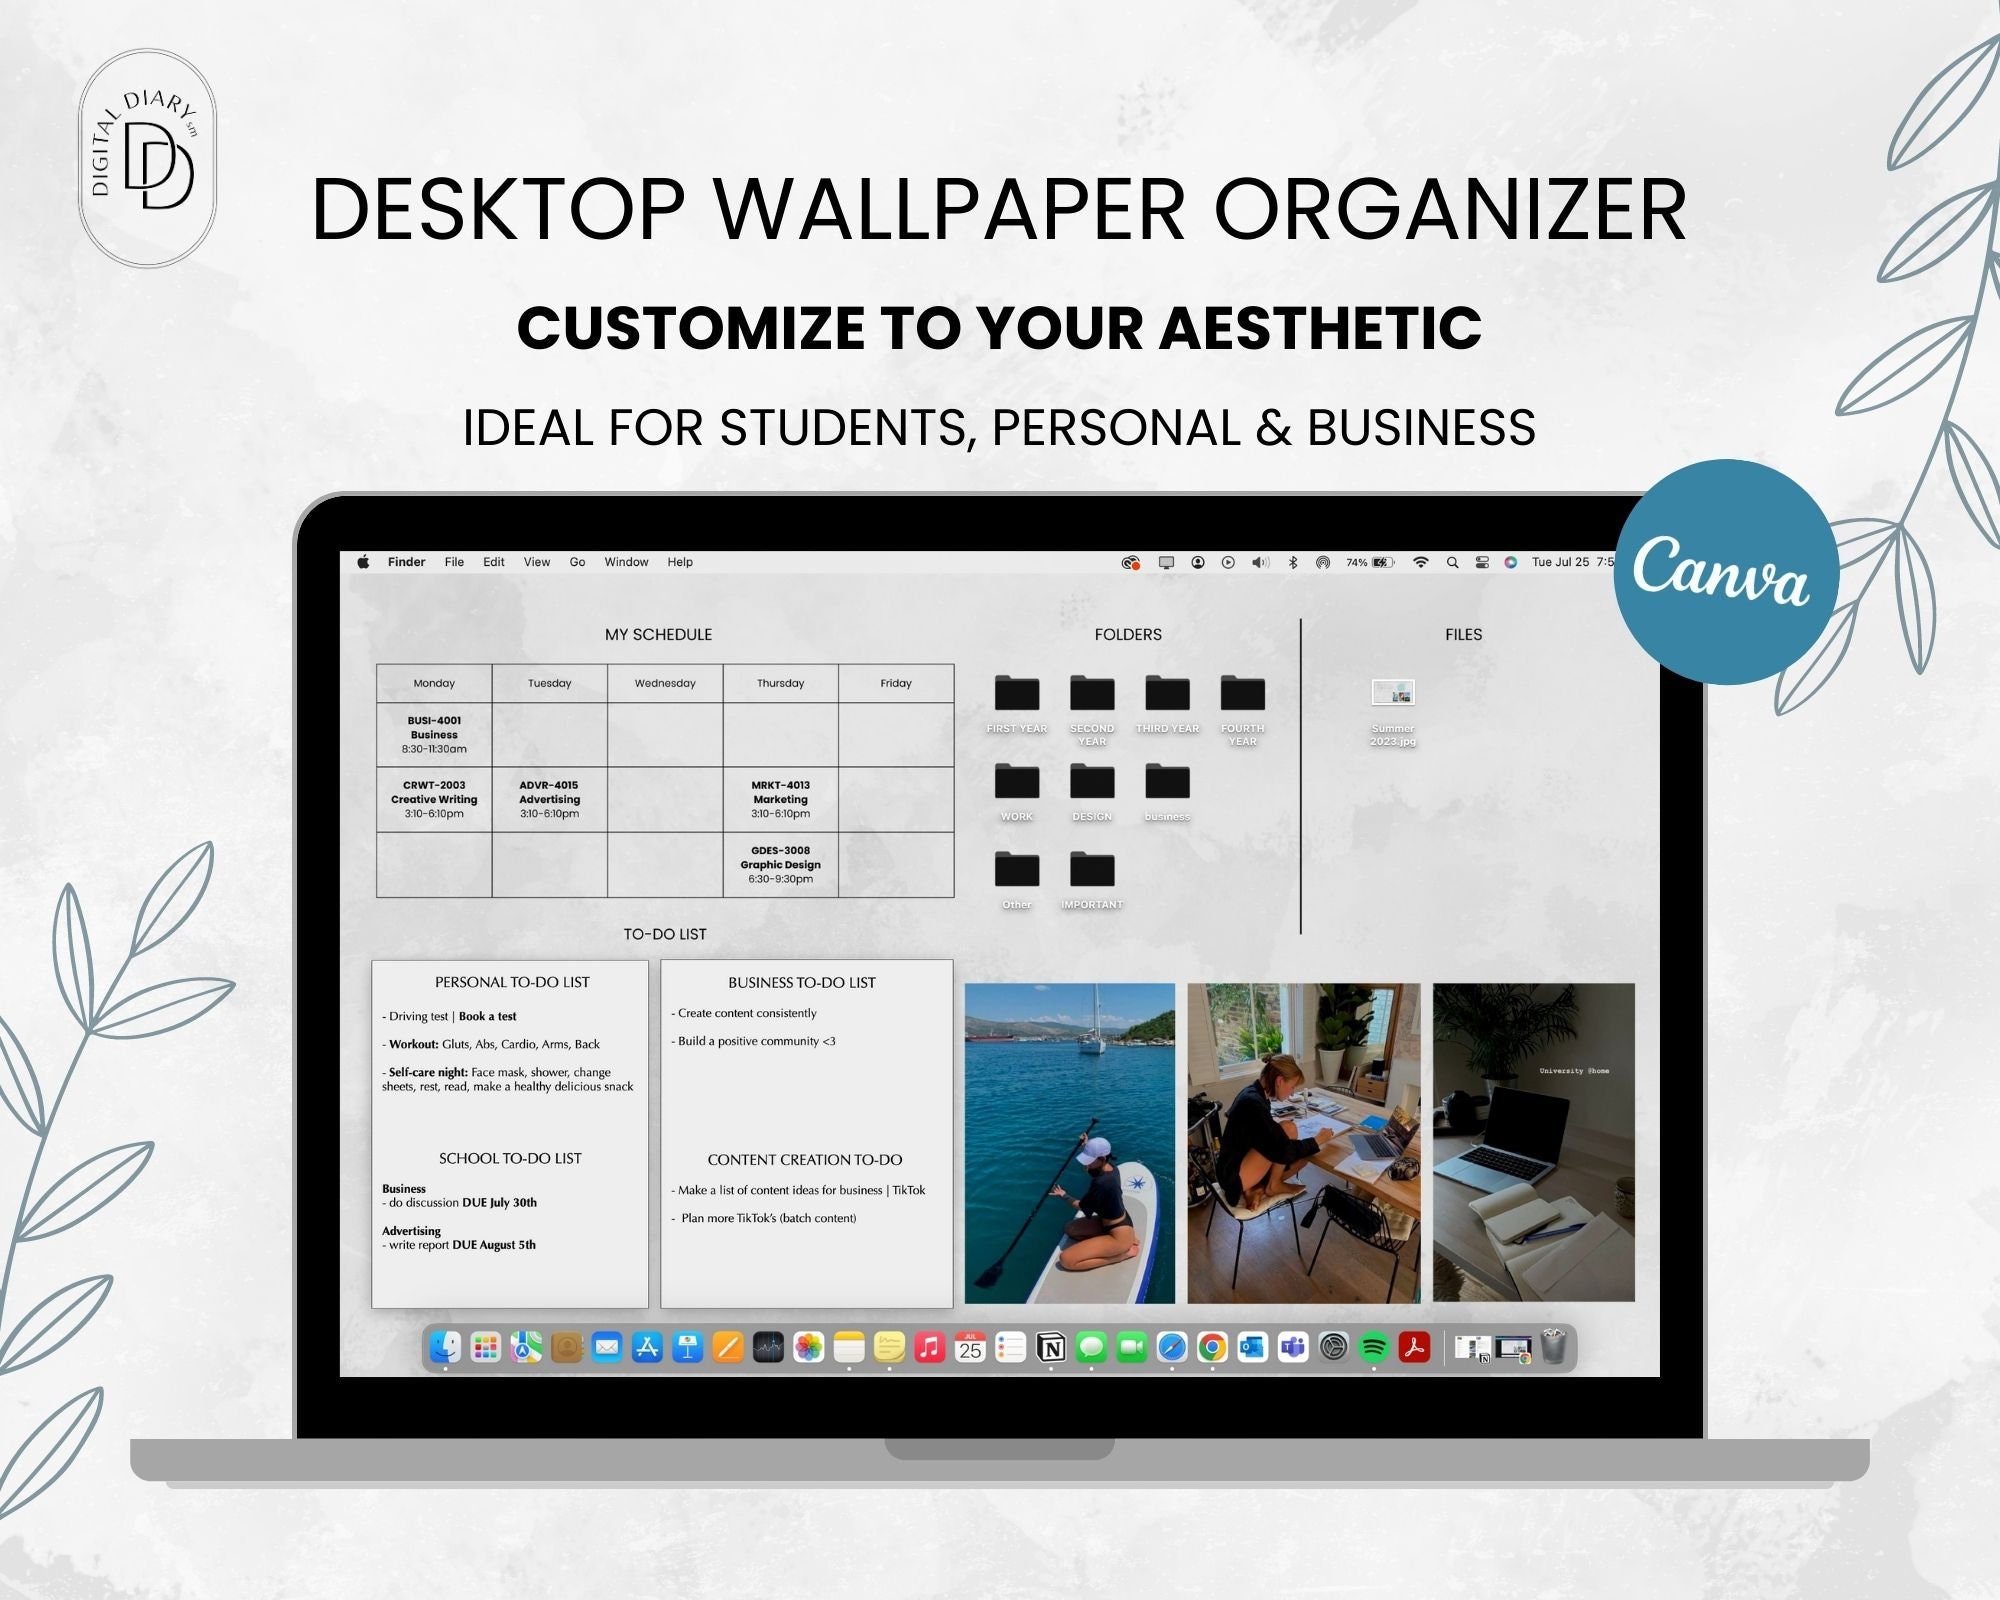 Page 17  Free custom desktop organizer wallpaper templates  Canva